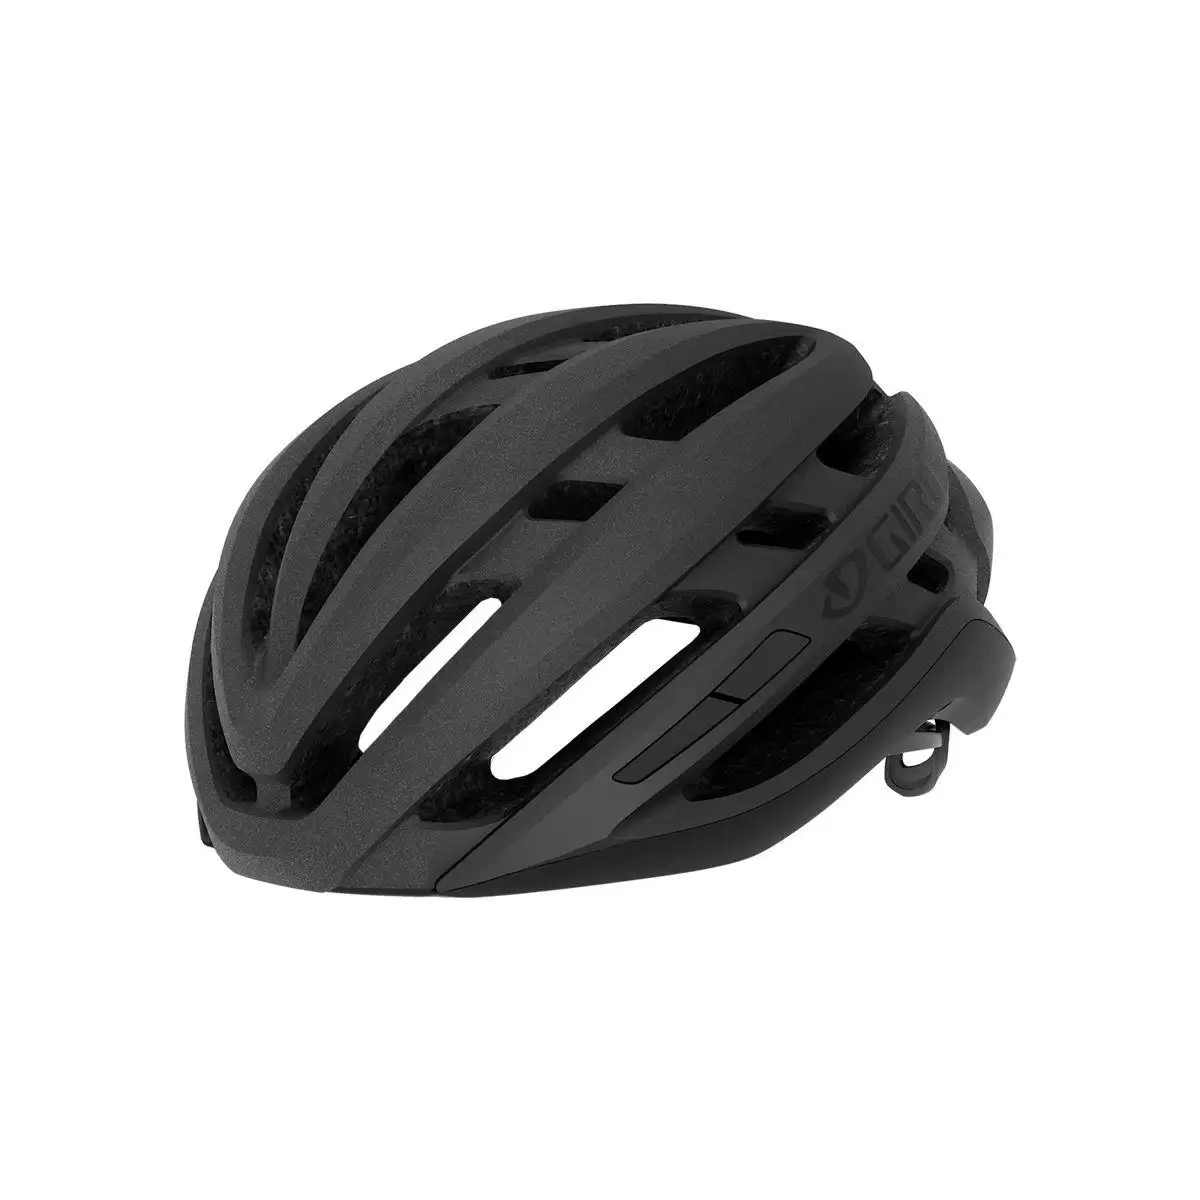 Helmet Agilis MIPS Black Size S (51-55cm) - image